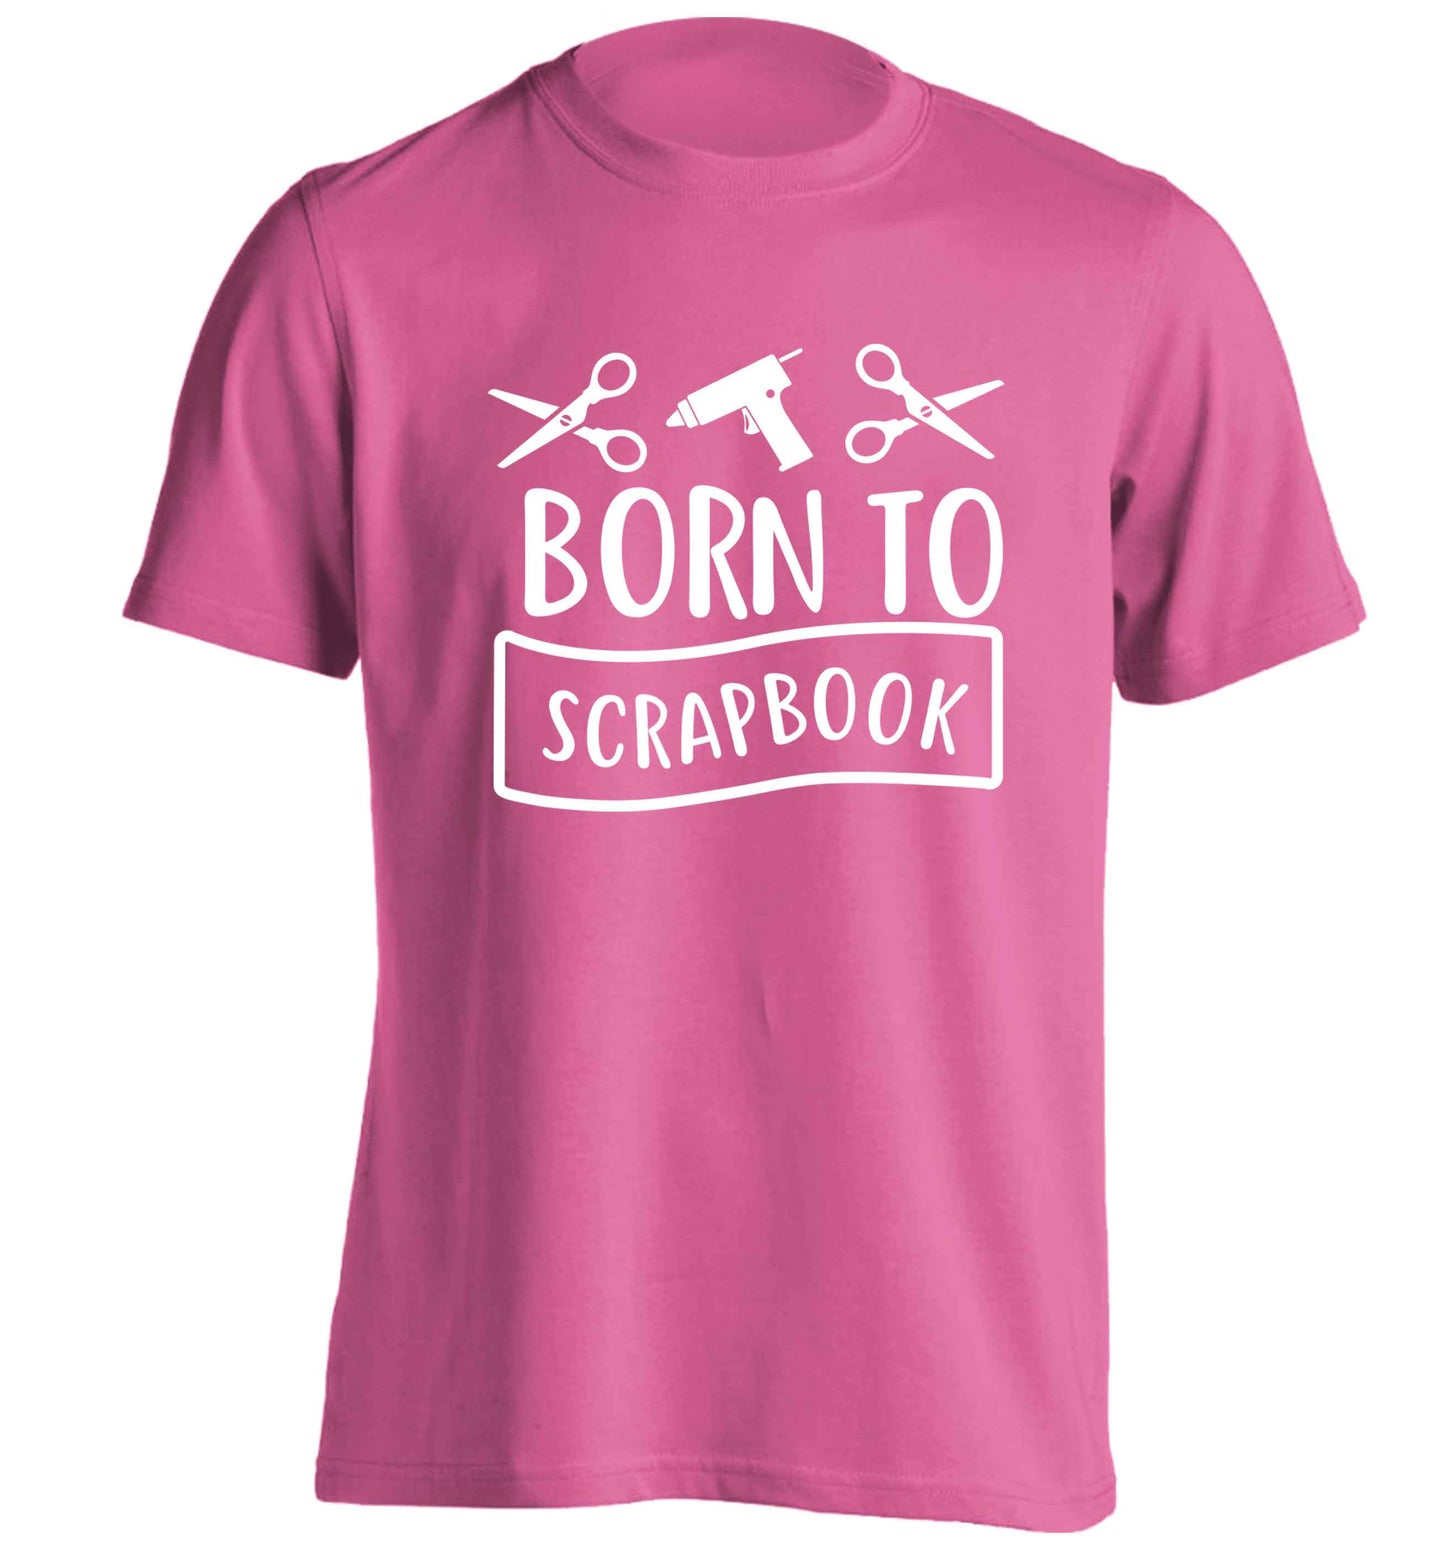 Born to scrapbook adults unisex pink Tshirt 2XL